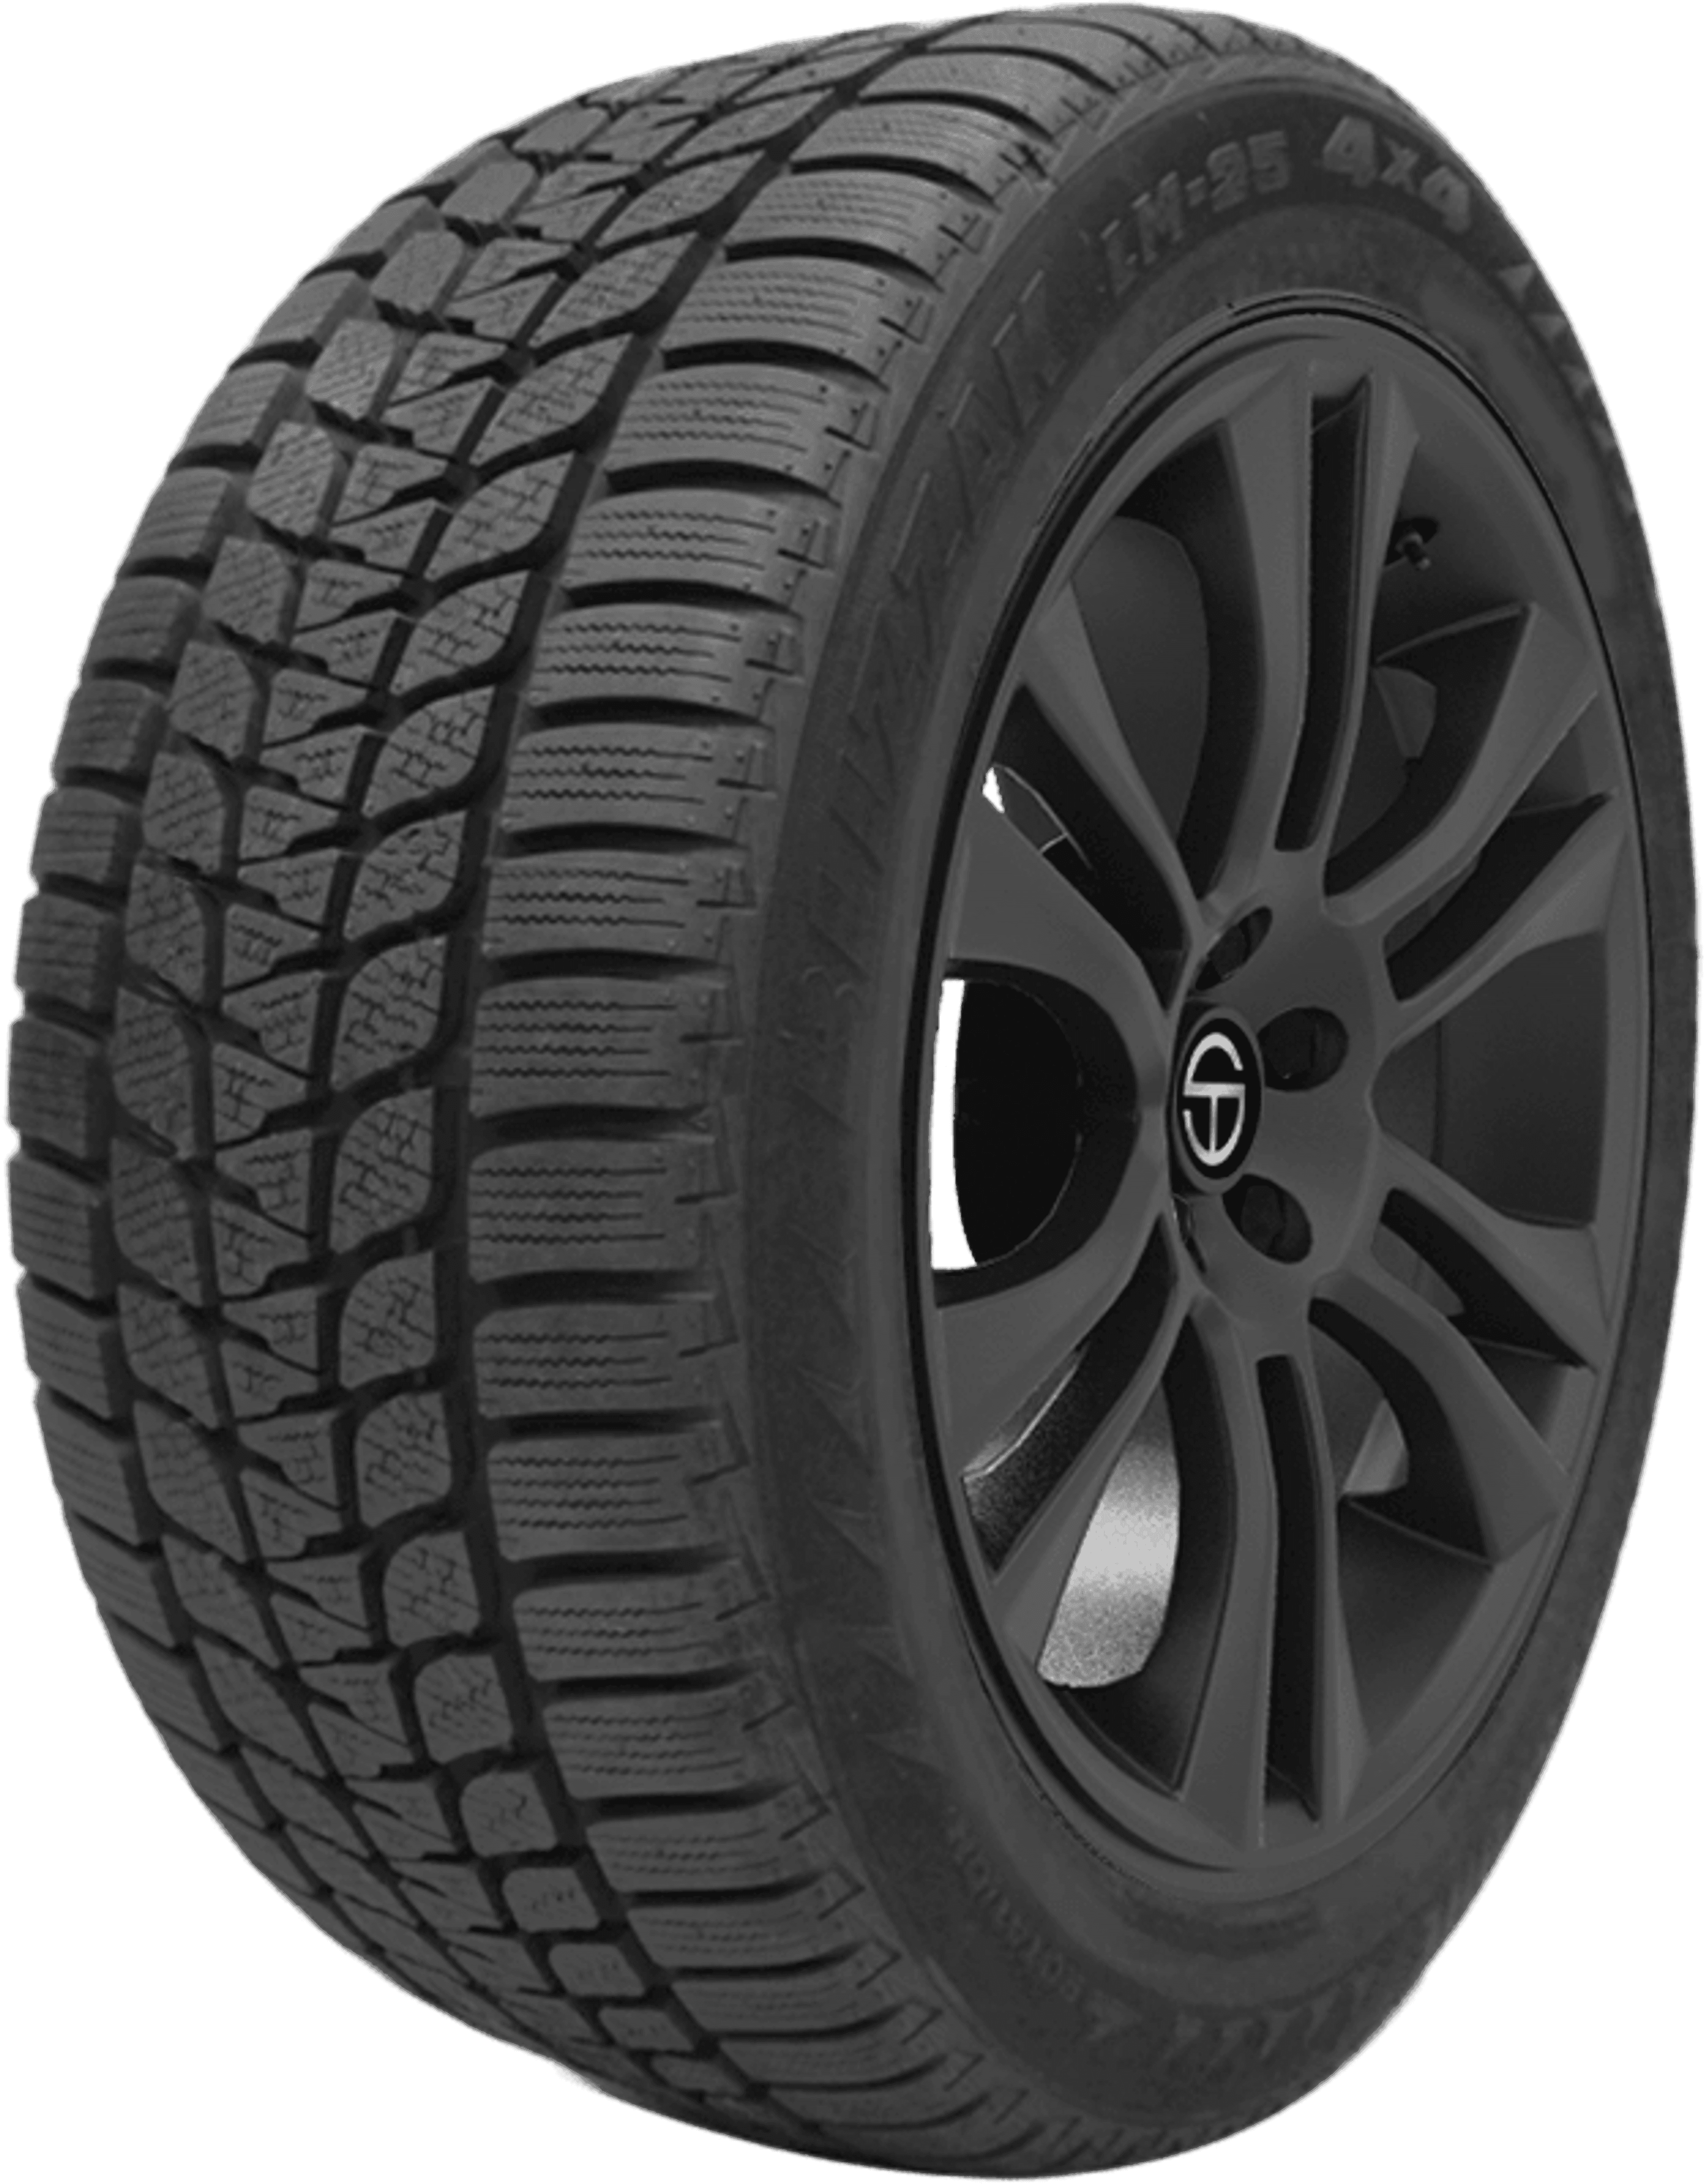 LM-25 | Buy MOE Bridgestone SimpleTire 4X4 Online Blizzak Tires